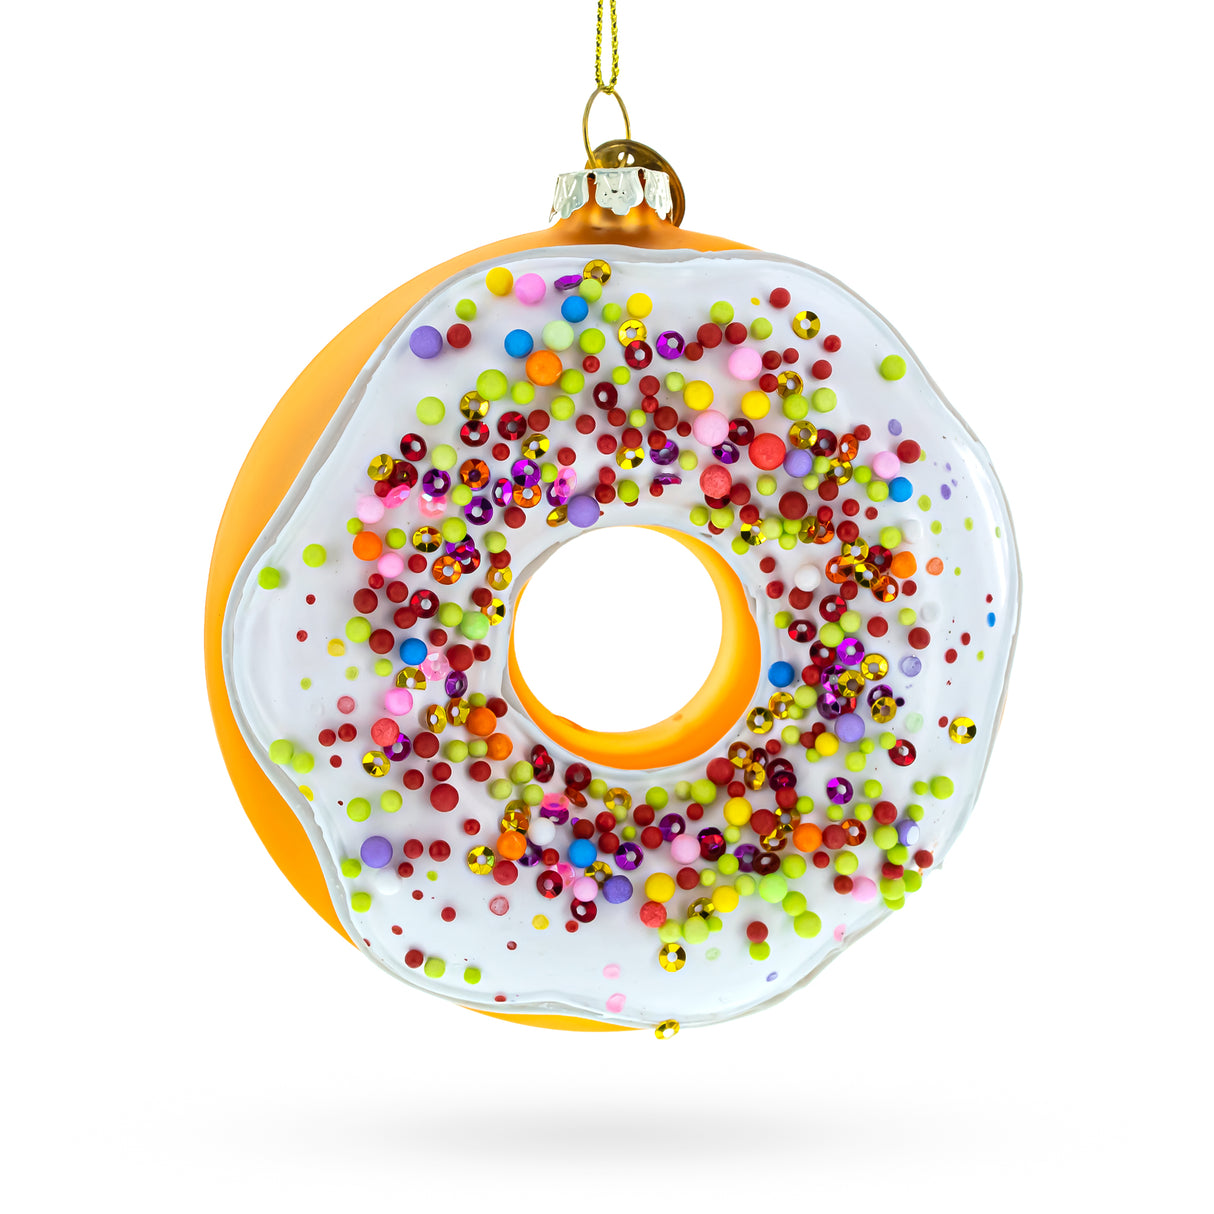 Glass Tempting Doughnut Delight - Blown Glass Christmas Ornament in Multi color Round